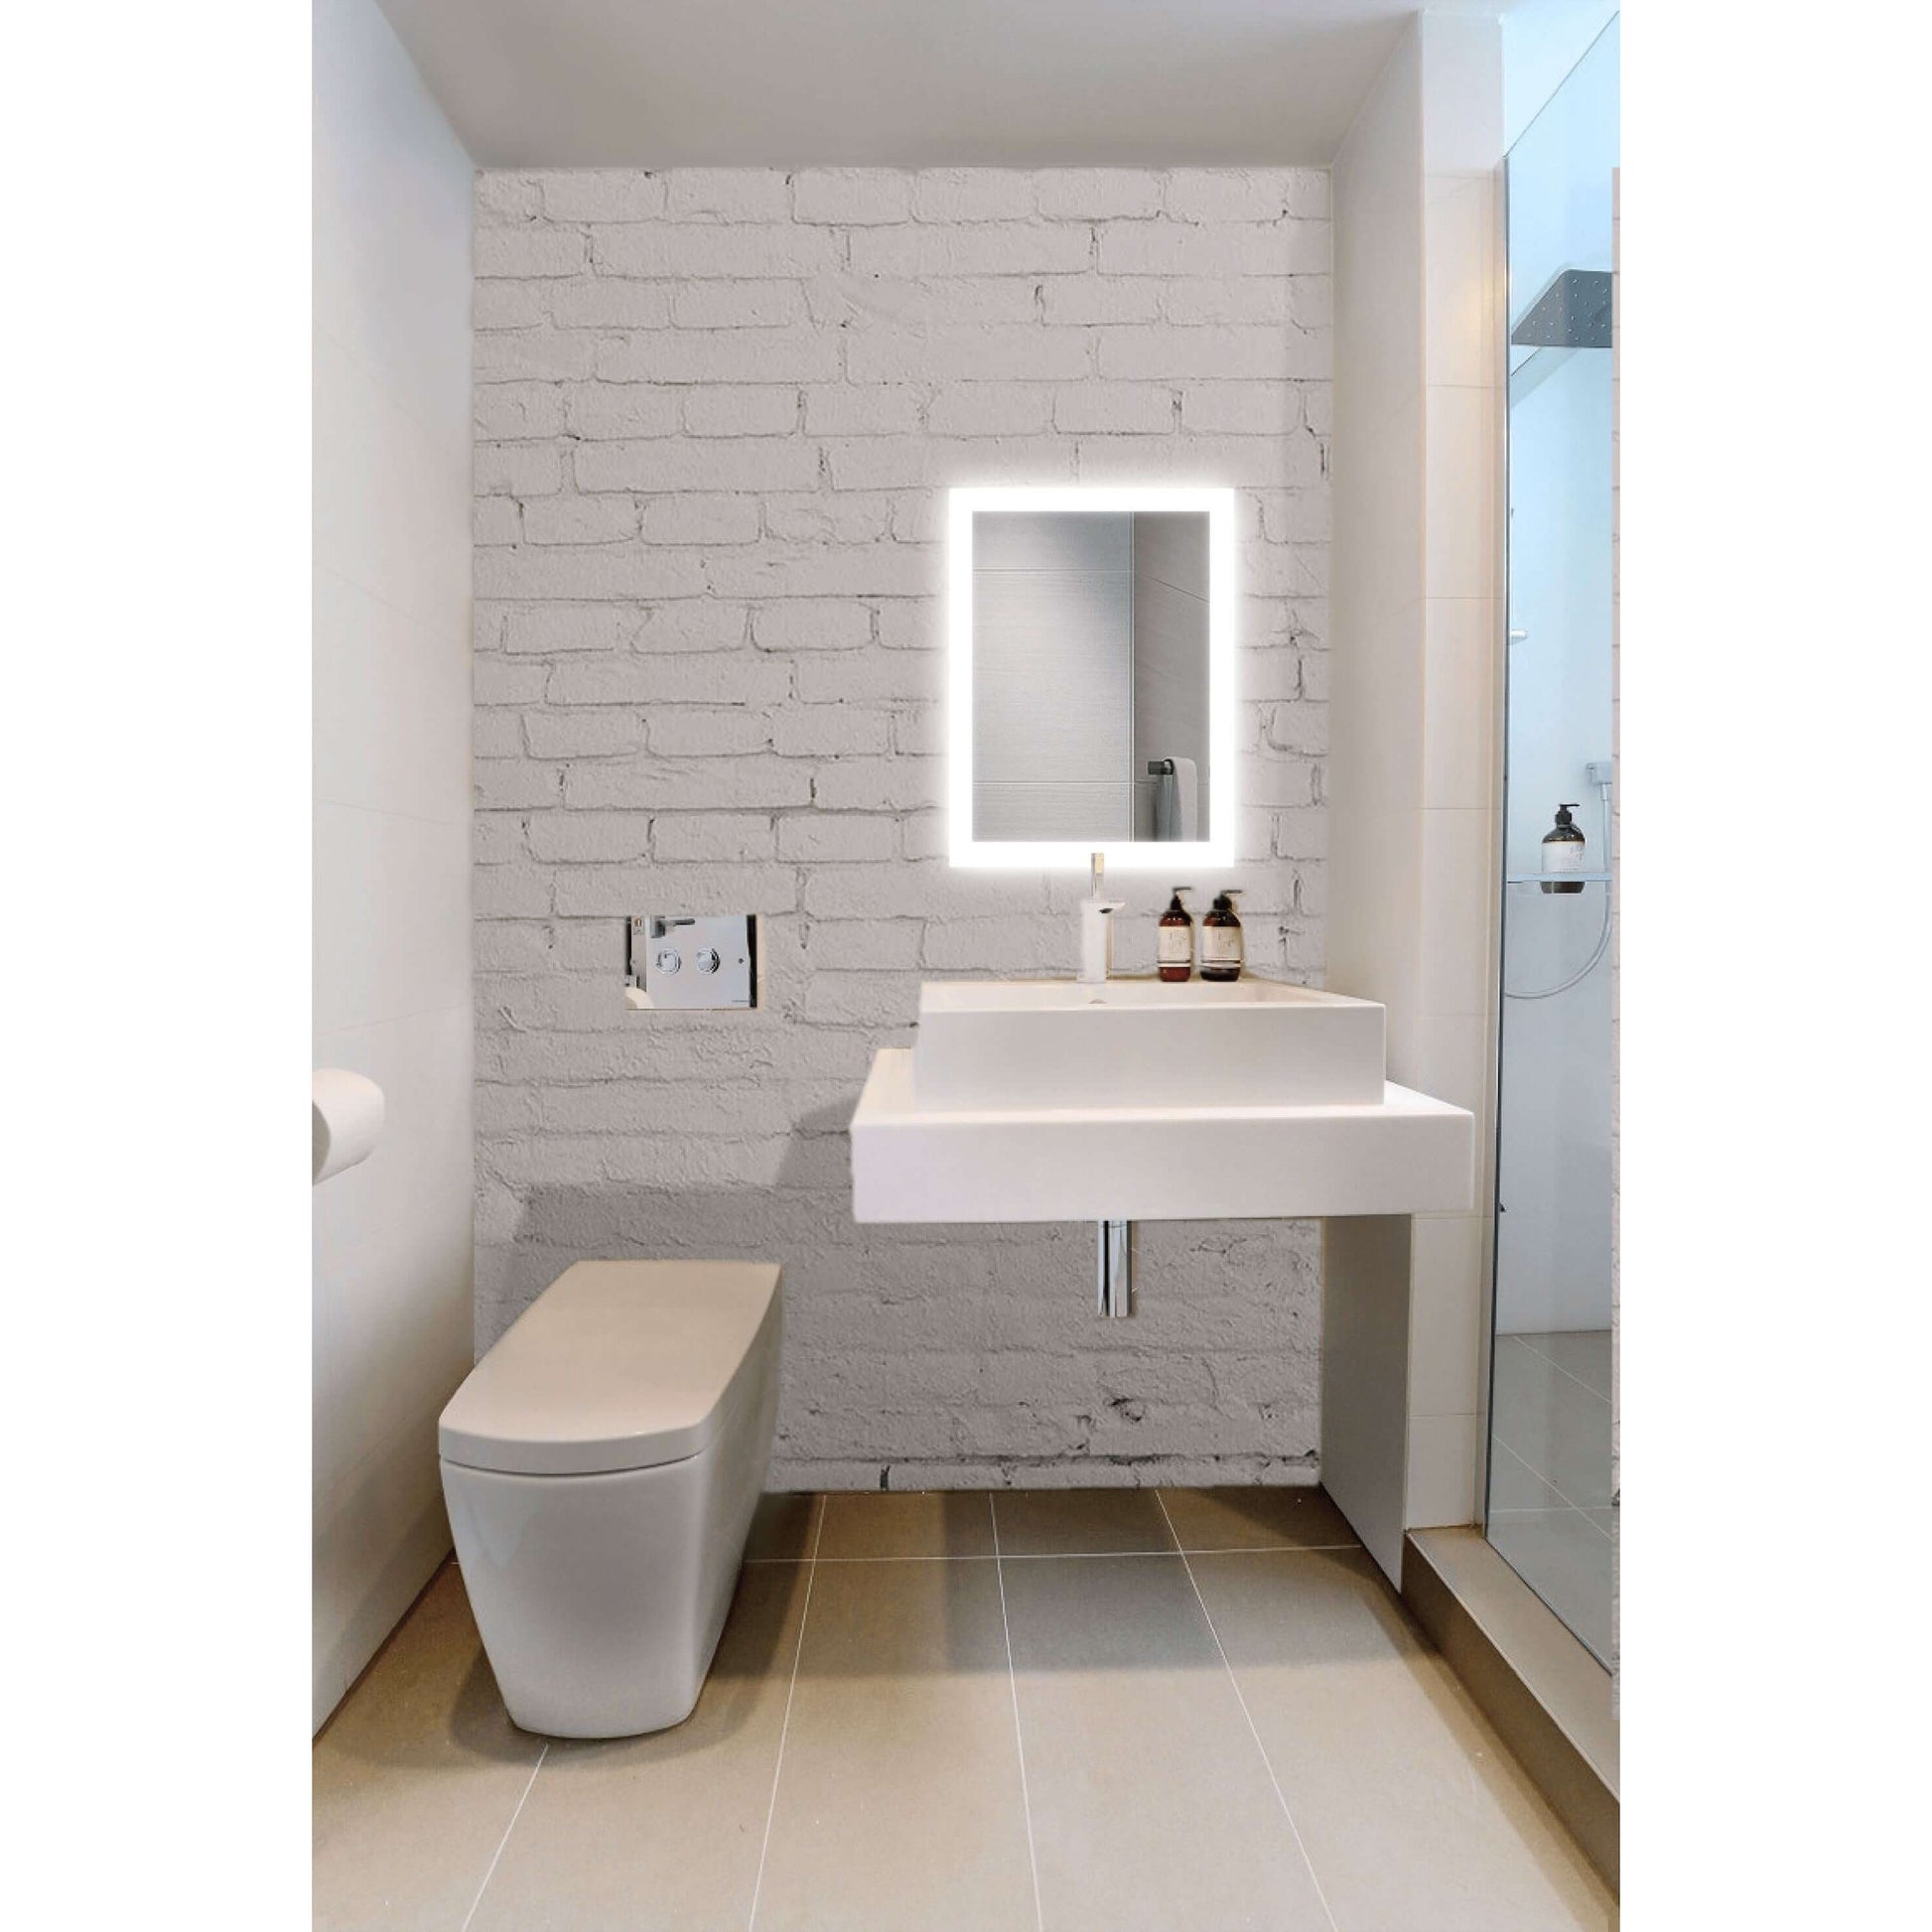 Krugg Bijou 15 X 20 LED mirror installed in a bathroom on white brick wall